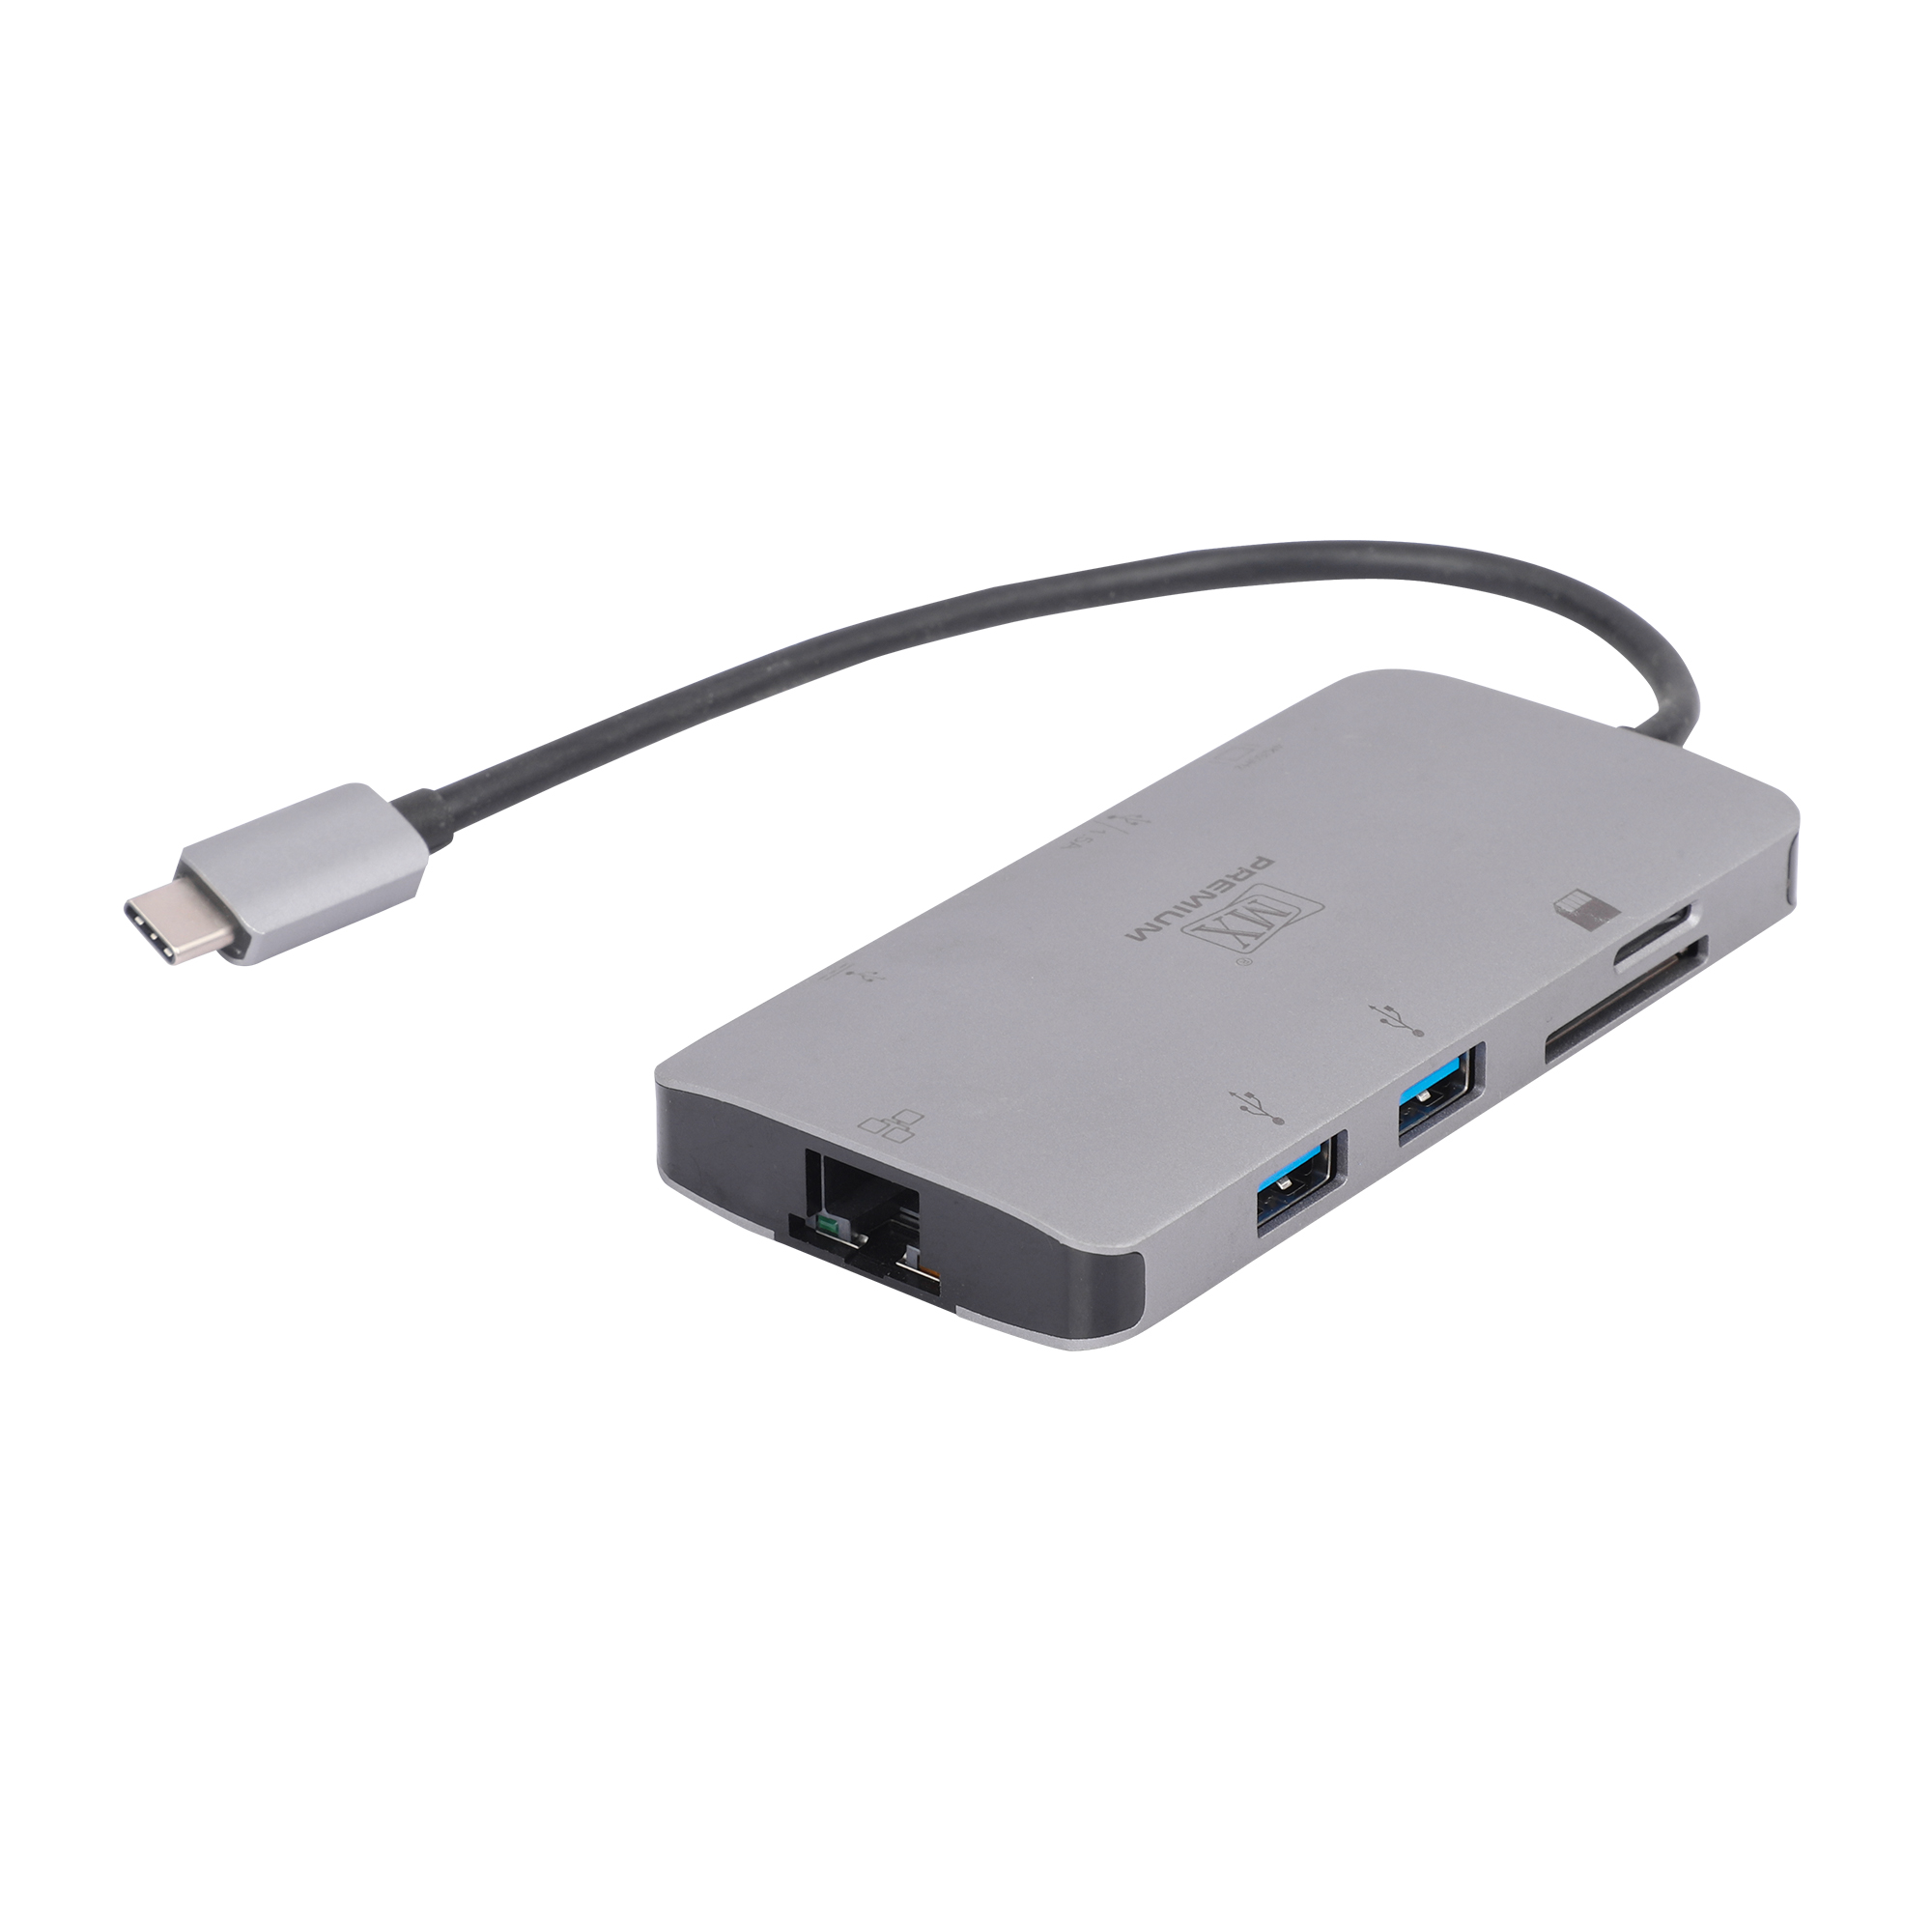 HDMI Alt Mode USB Type-C